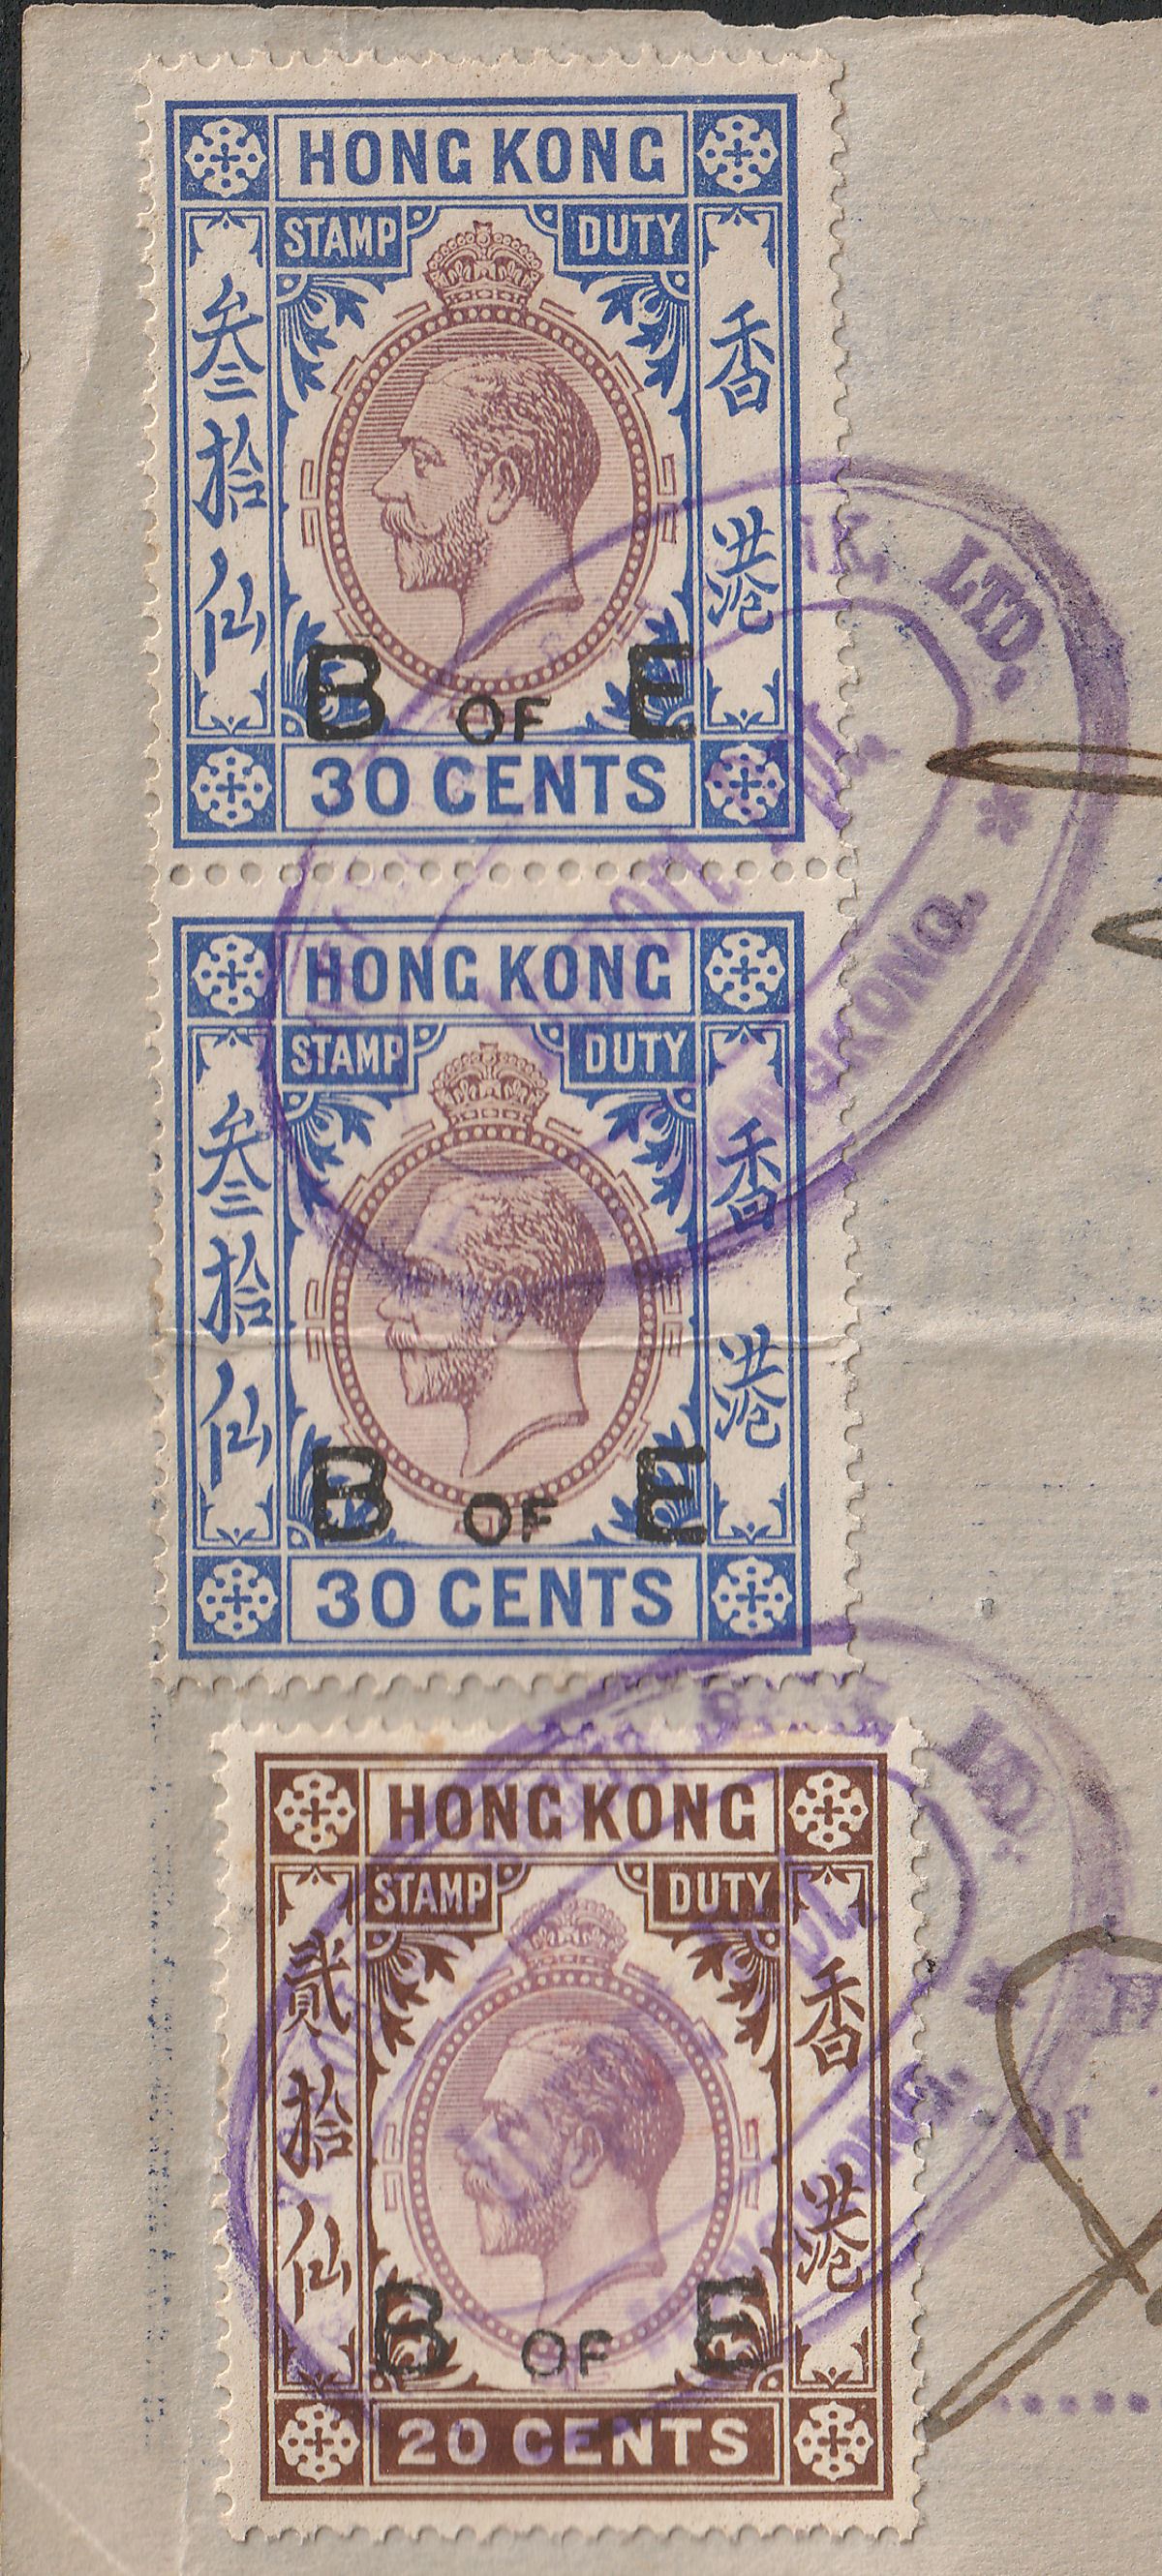 Hong Kong 1928 KGV Revenue BofE 20c 30c 50c Used Yokohama Bank Bill of Exchange